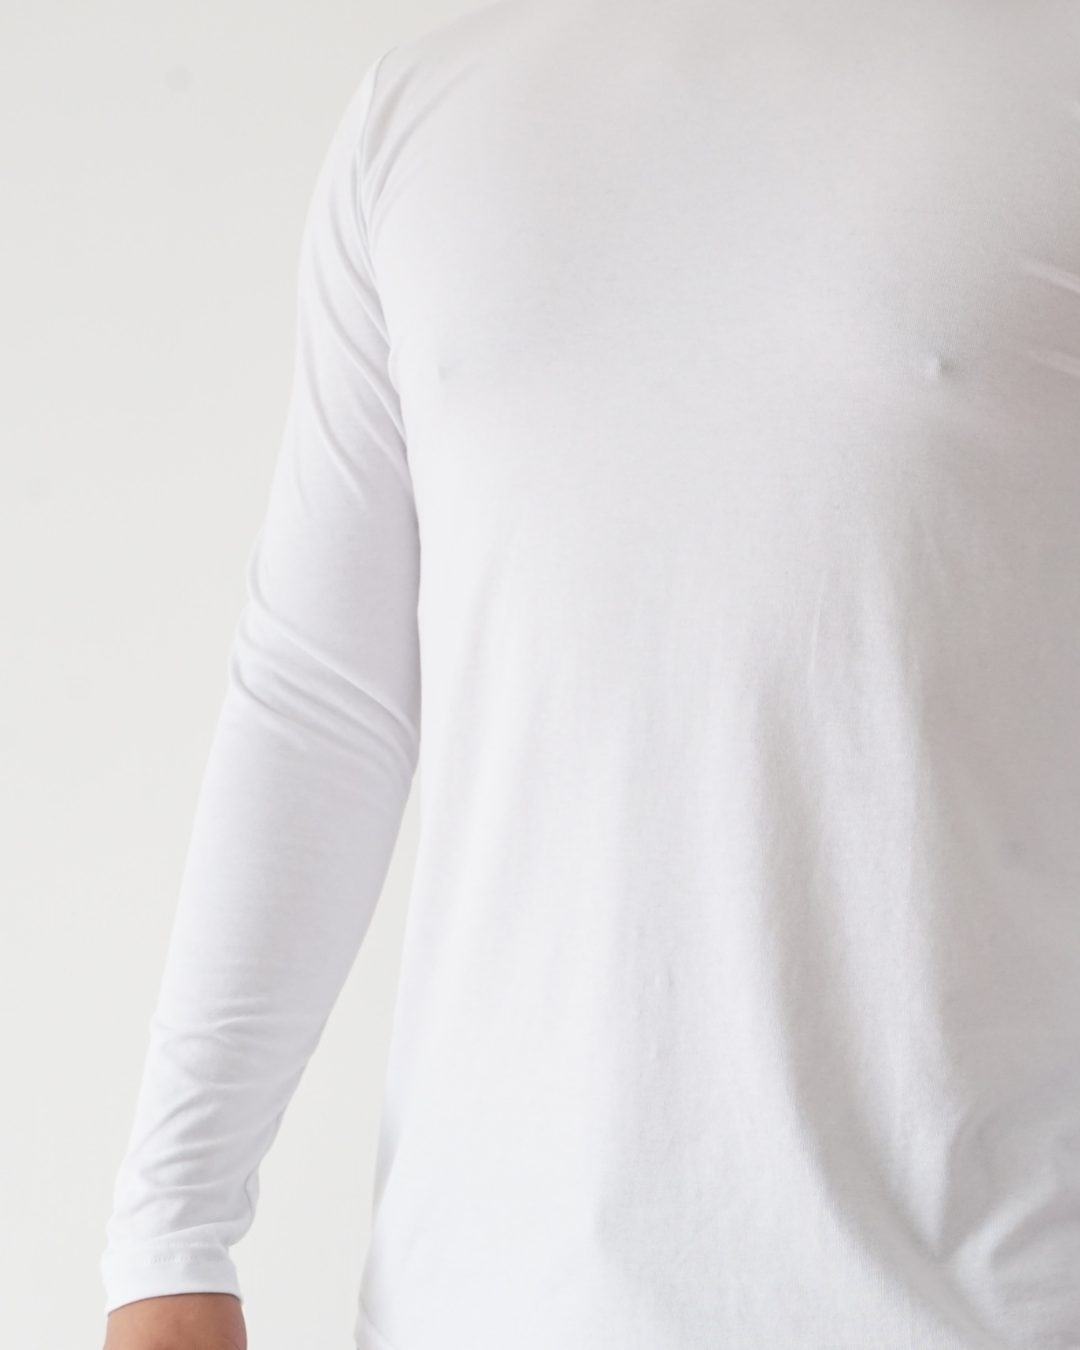 White T-shirt - Long Sleeve Wide Neck Original Bottom